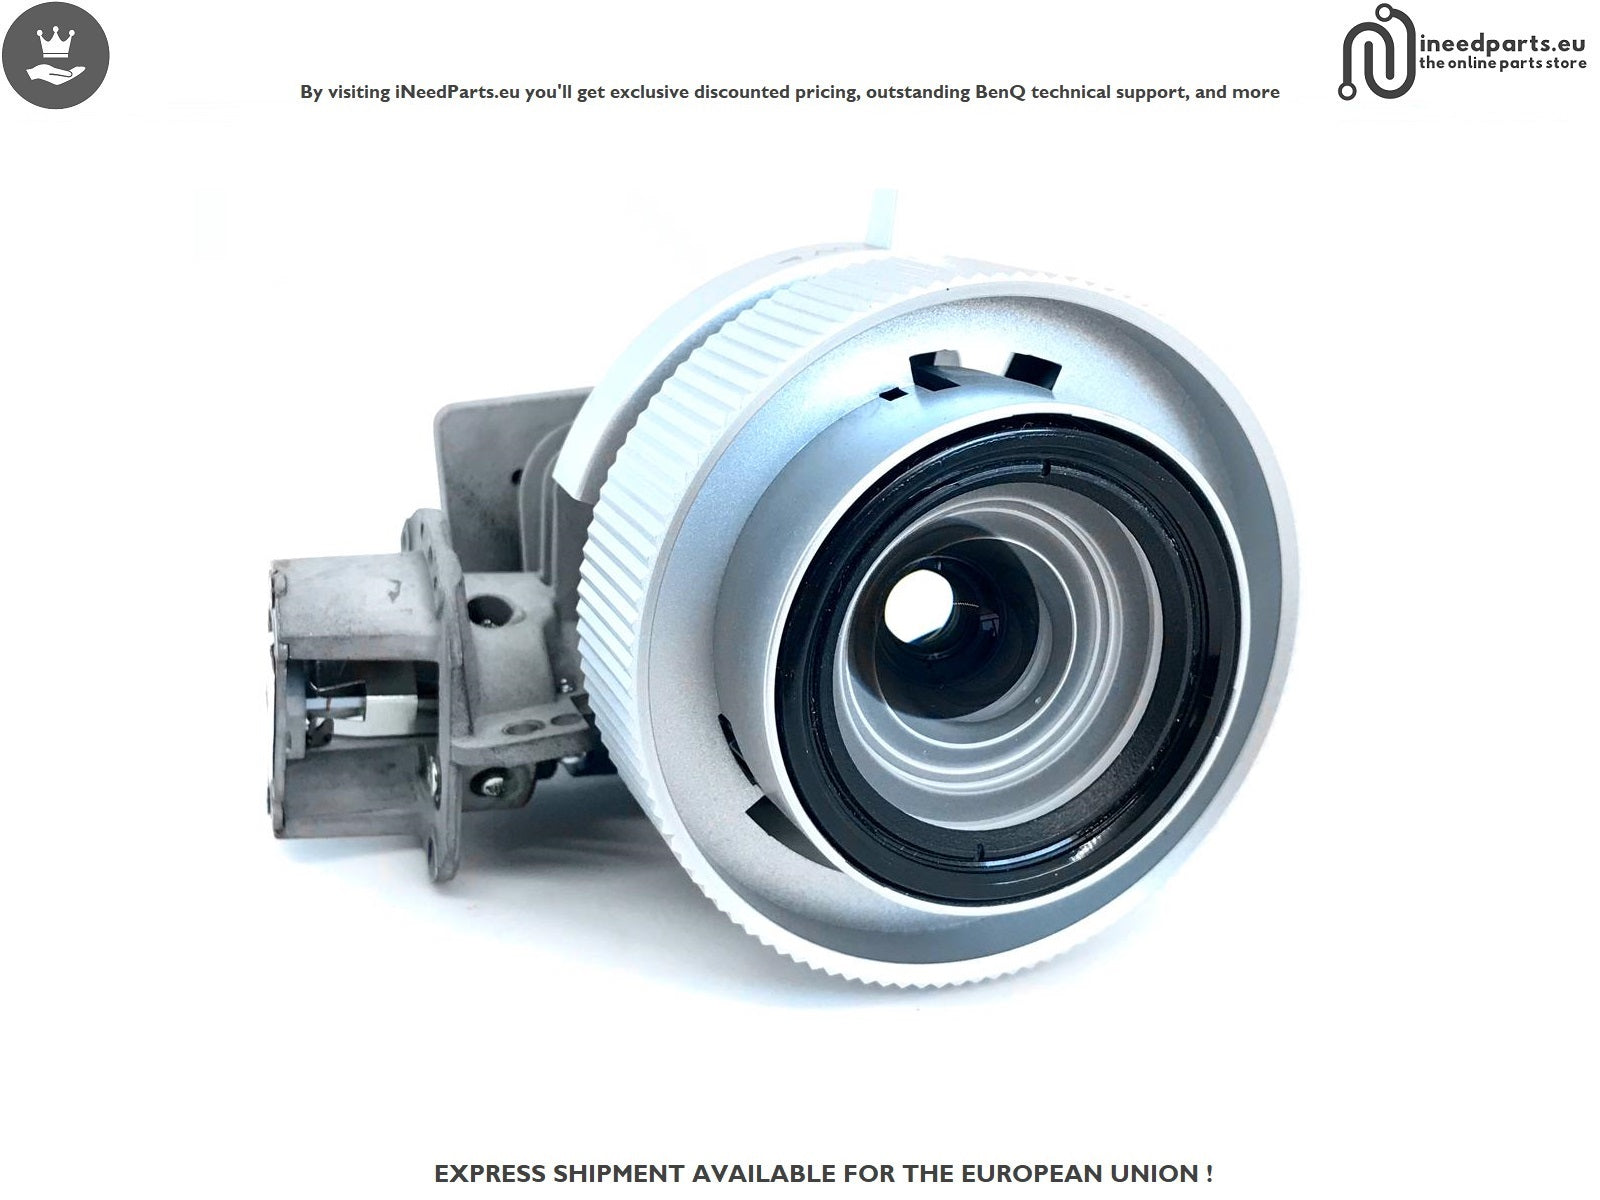 Optical Engine Assy Lens 0.55 Zoom F2.59-2.91 BenQ MX726